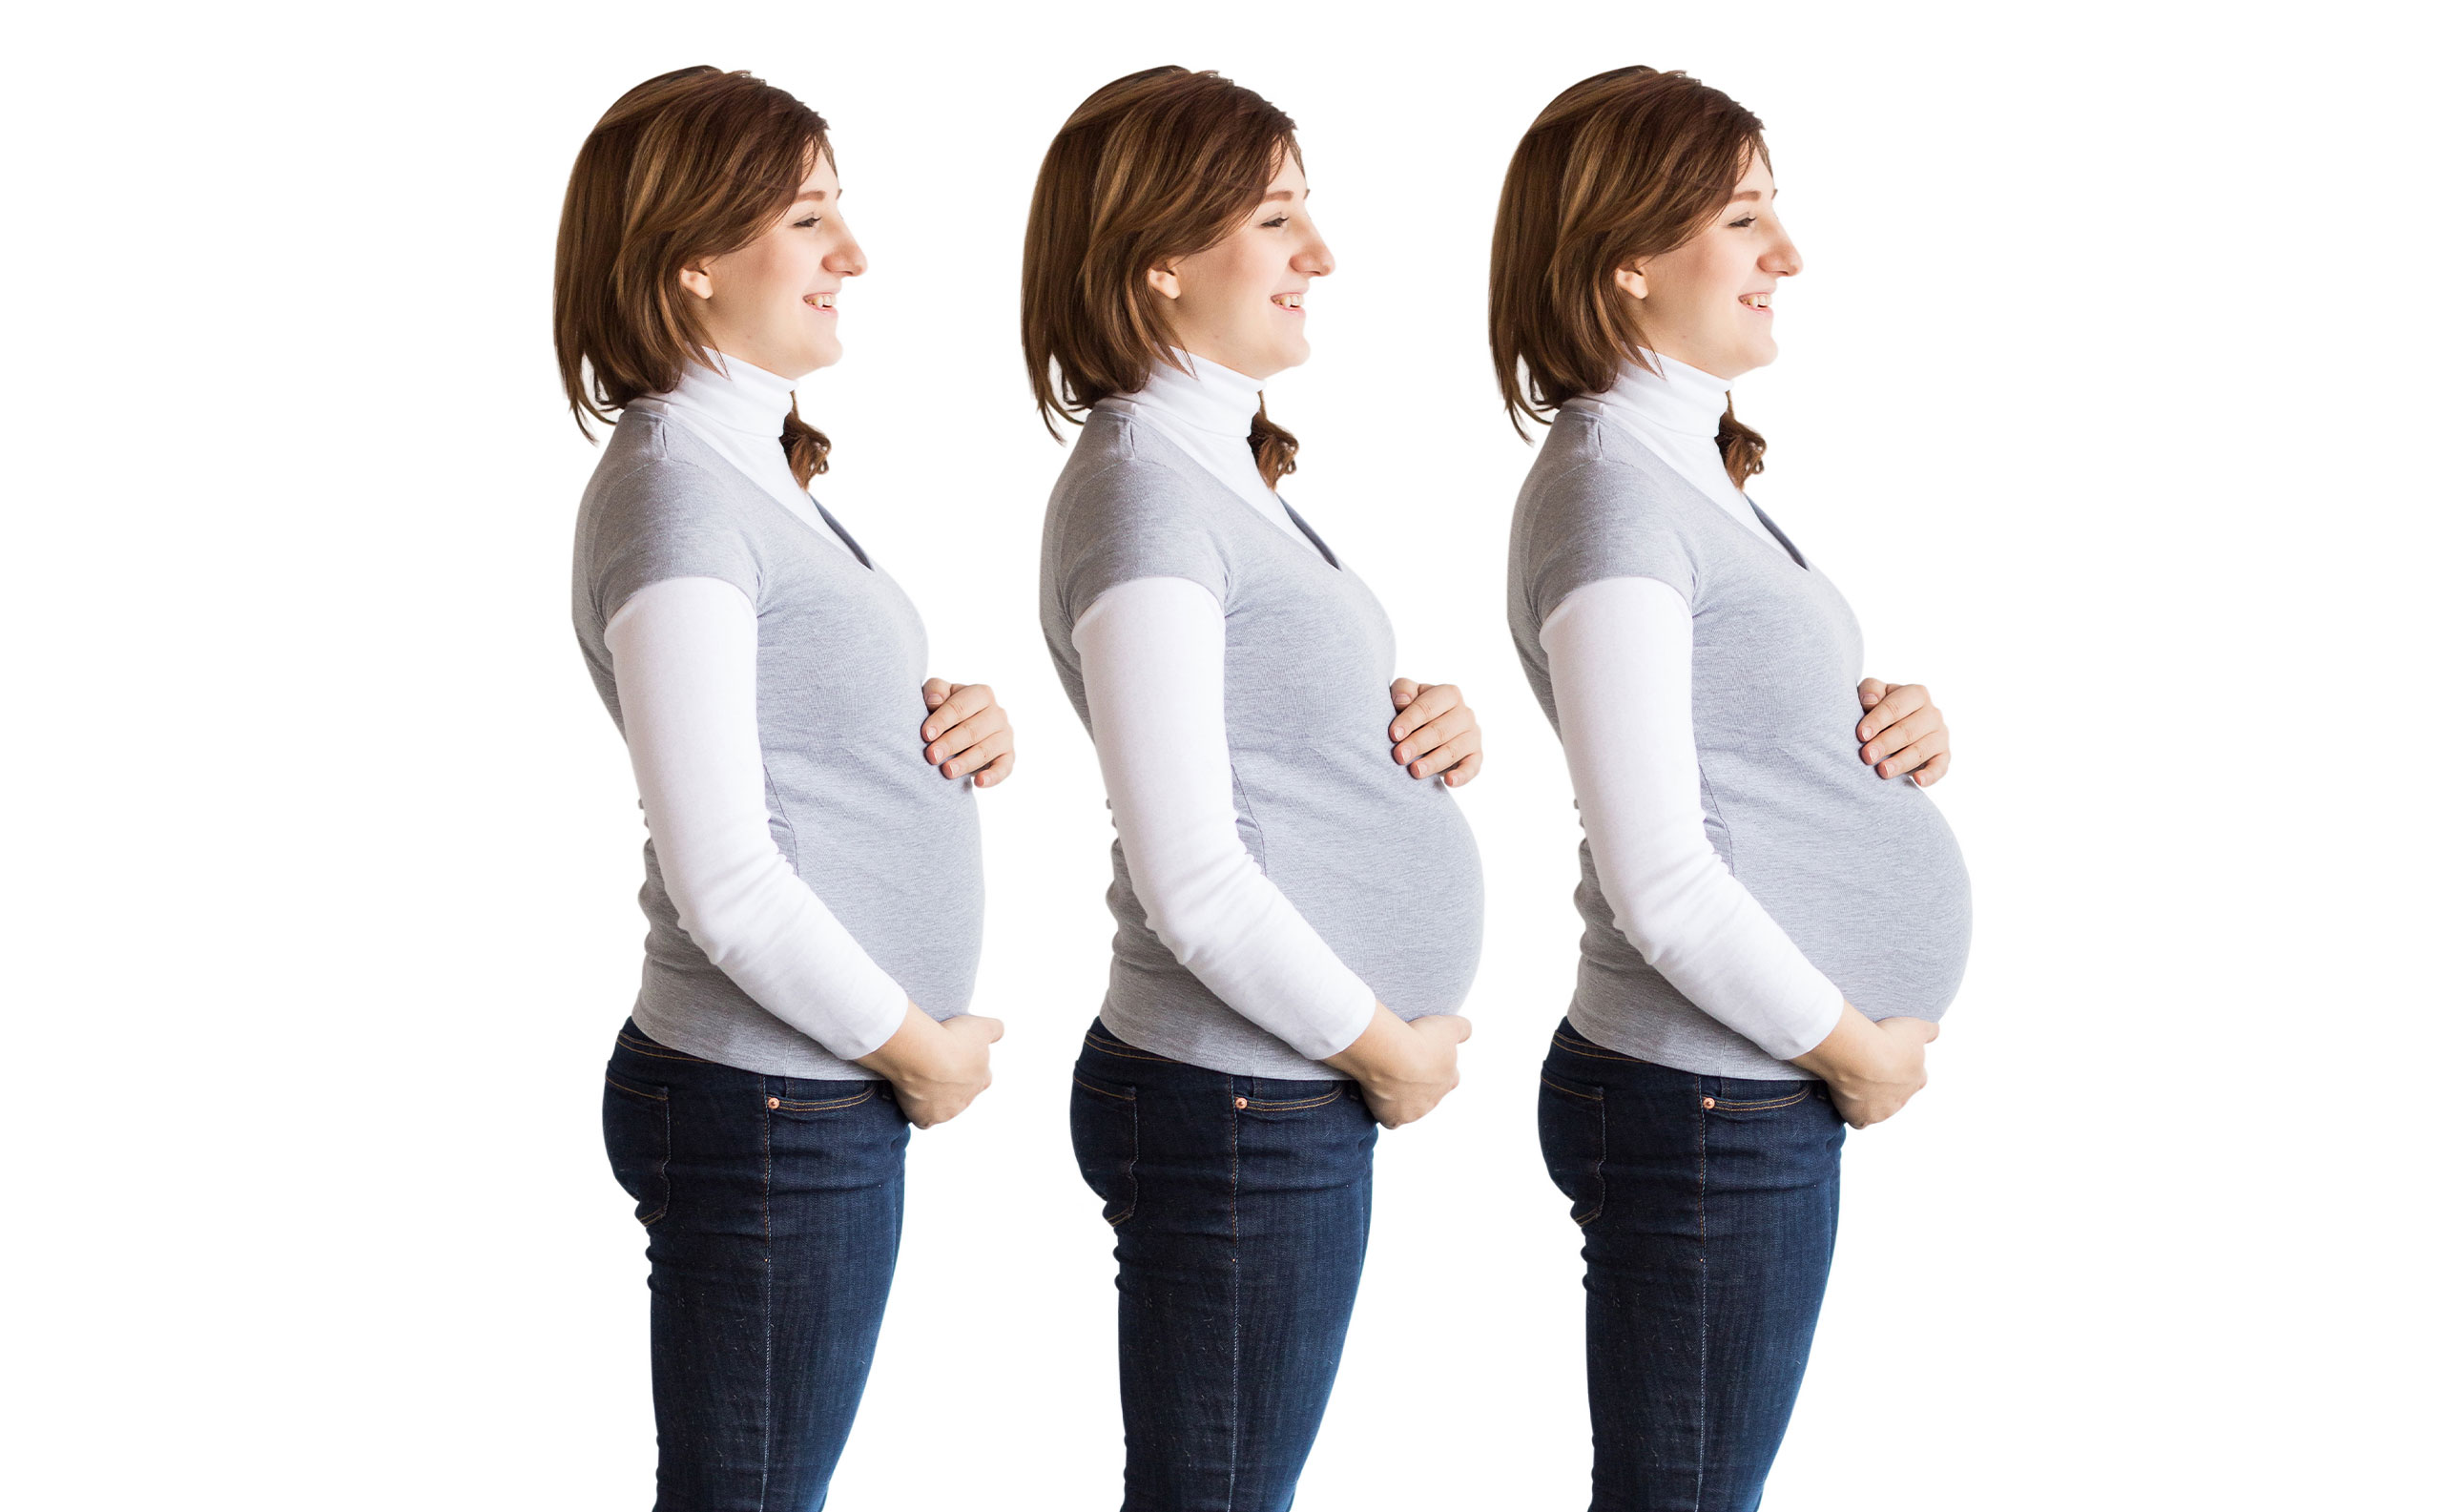 etapas embarazo